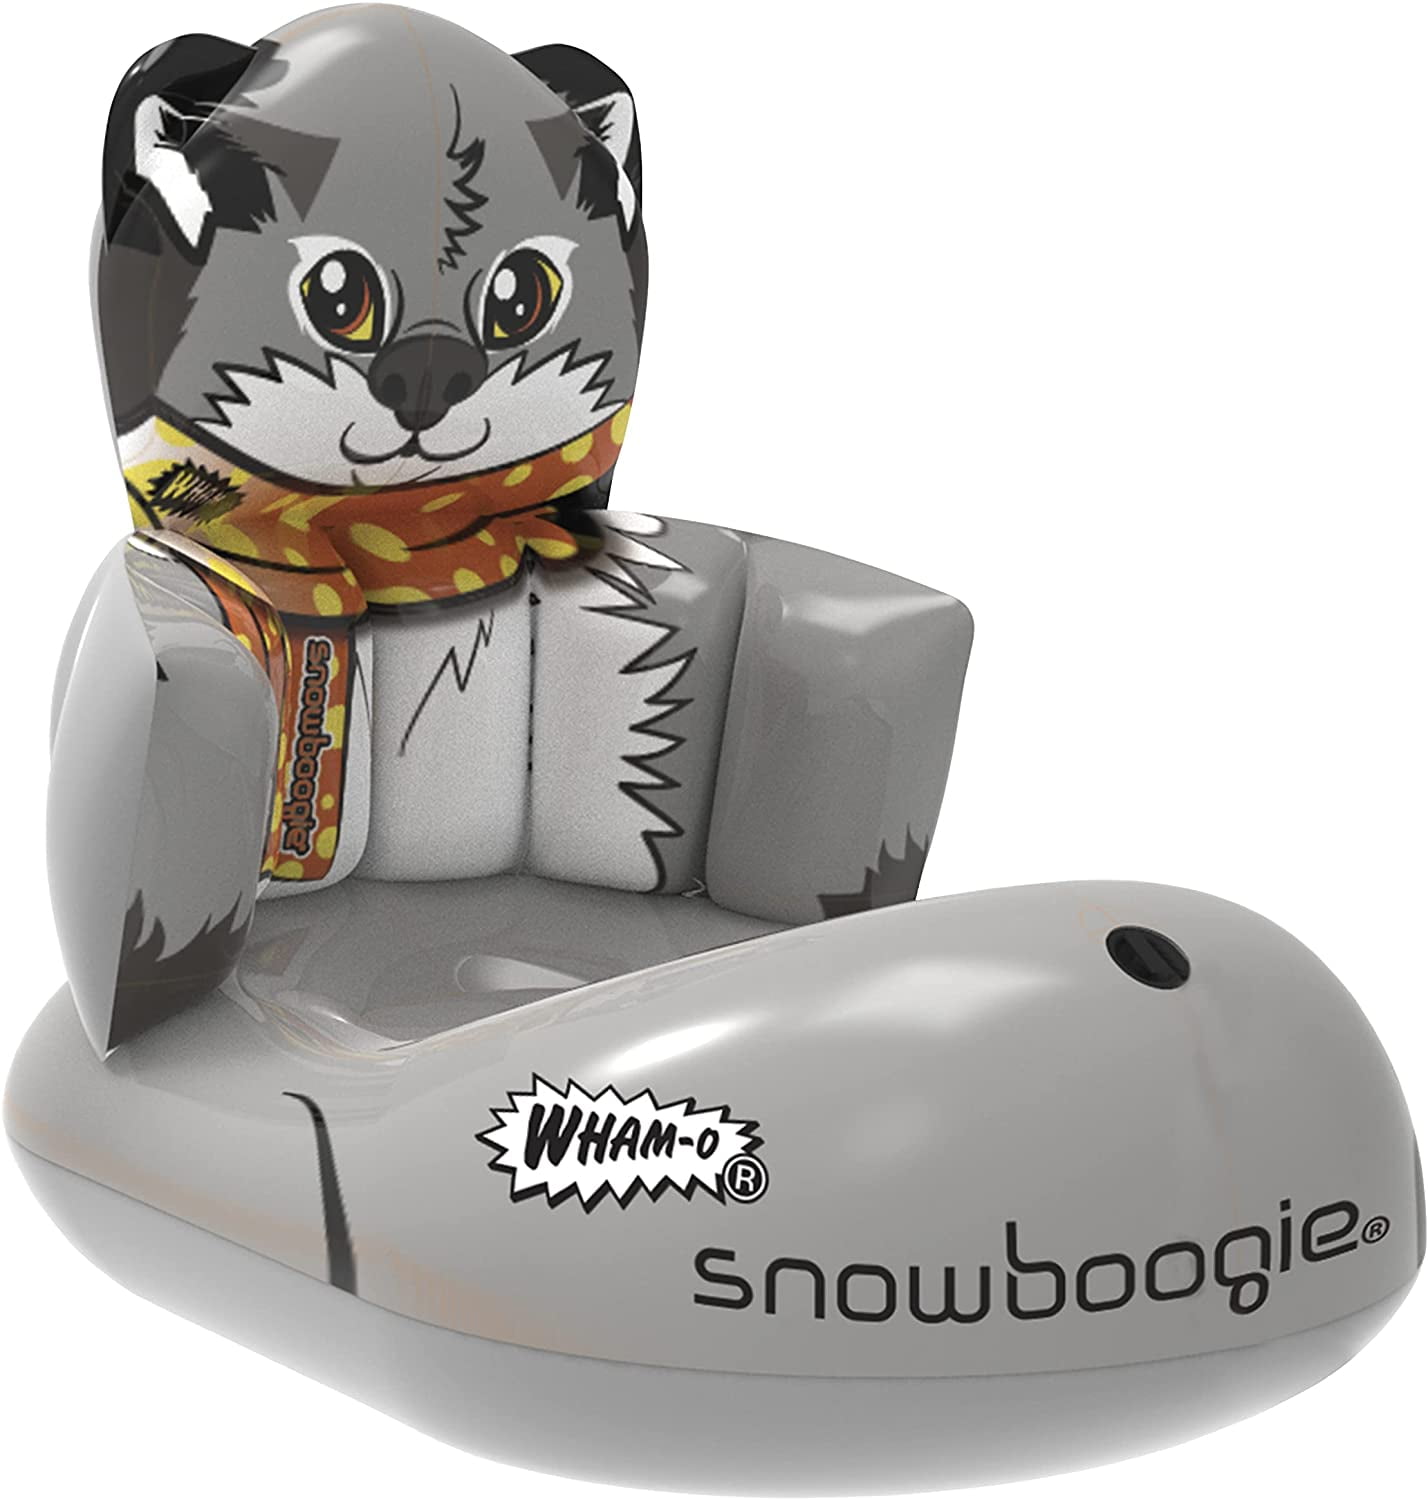 Wham-O Animal seal Shape Foam Snowboogie Board new ex display free postage 